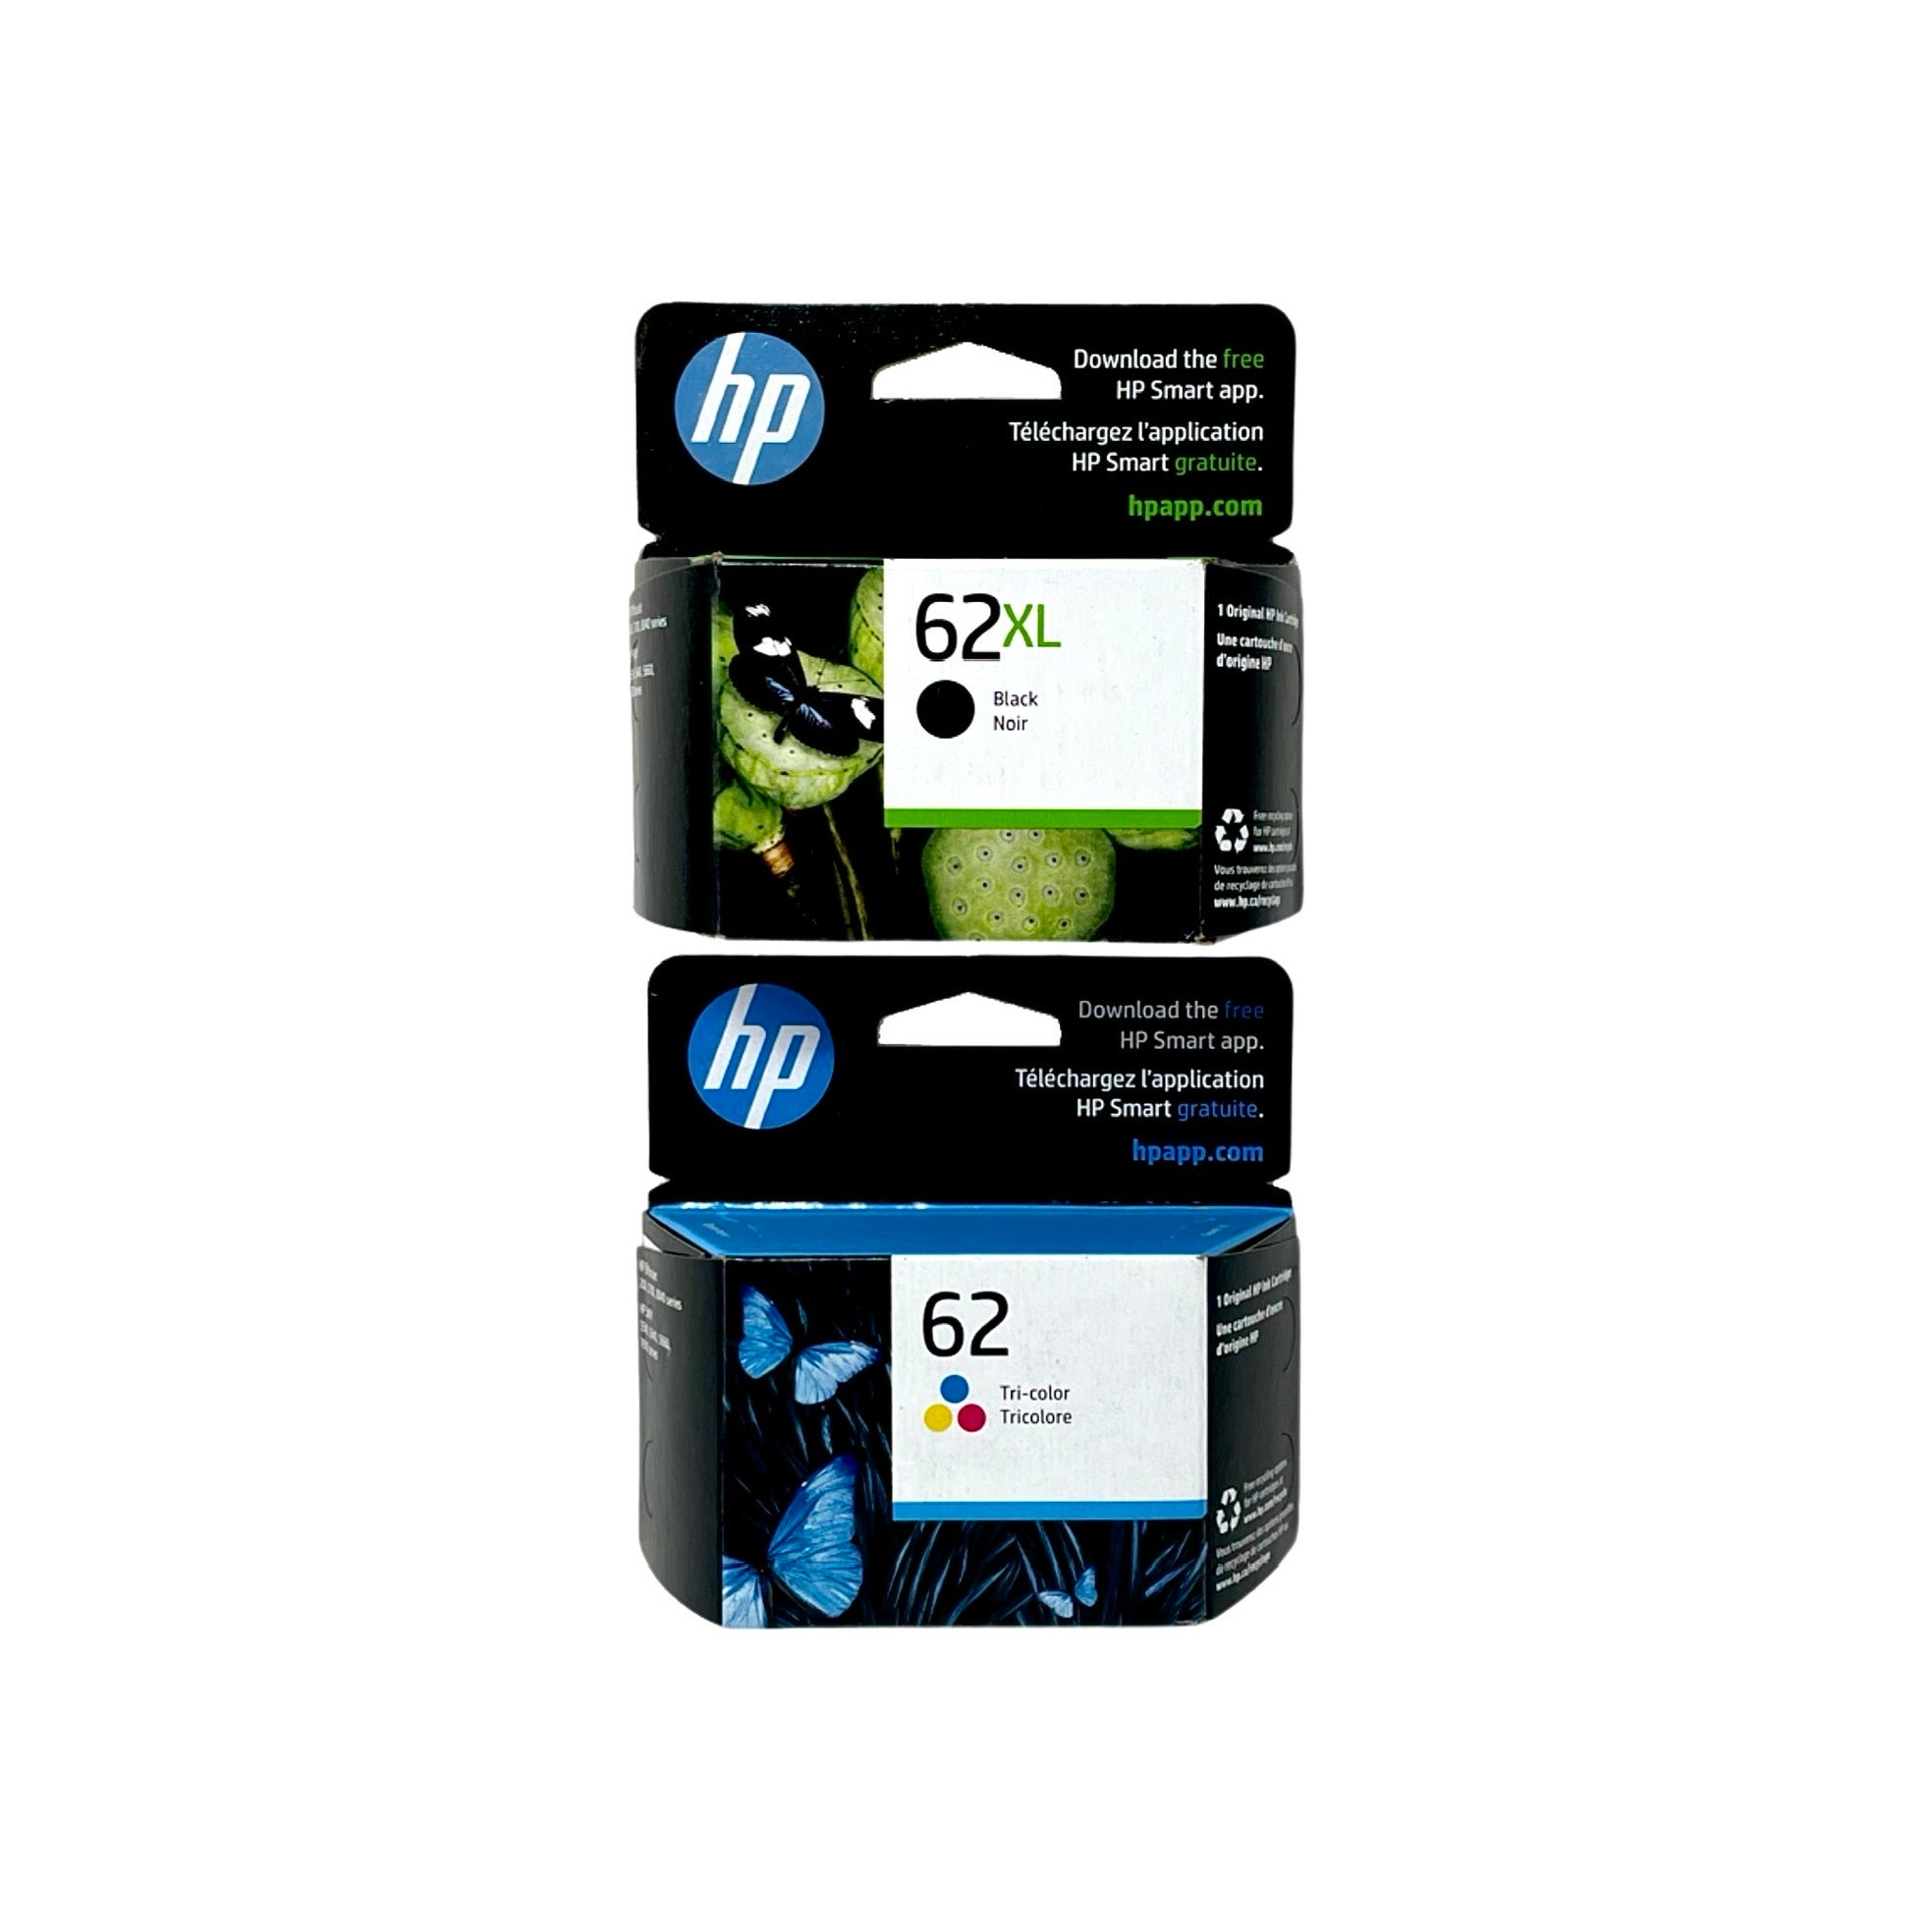 HP 62 Ink Cartridge Color - HP 62 Color Ink Cartridge @ $23.95